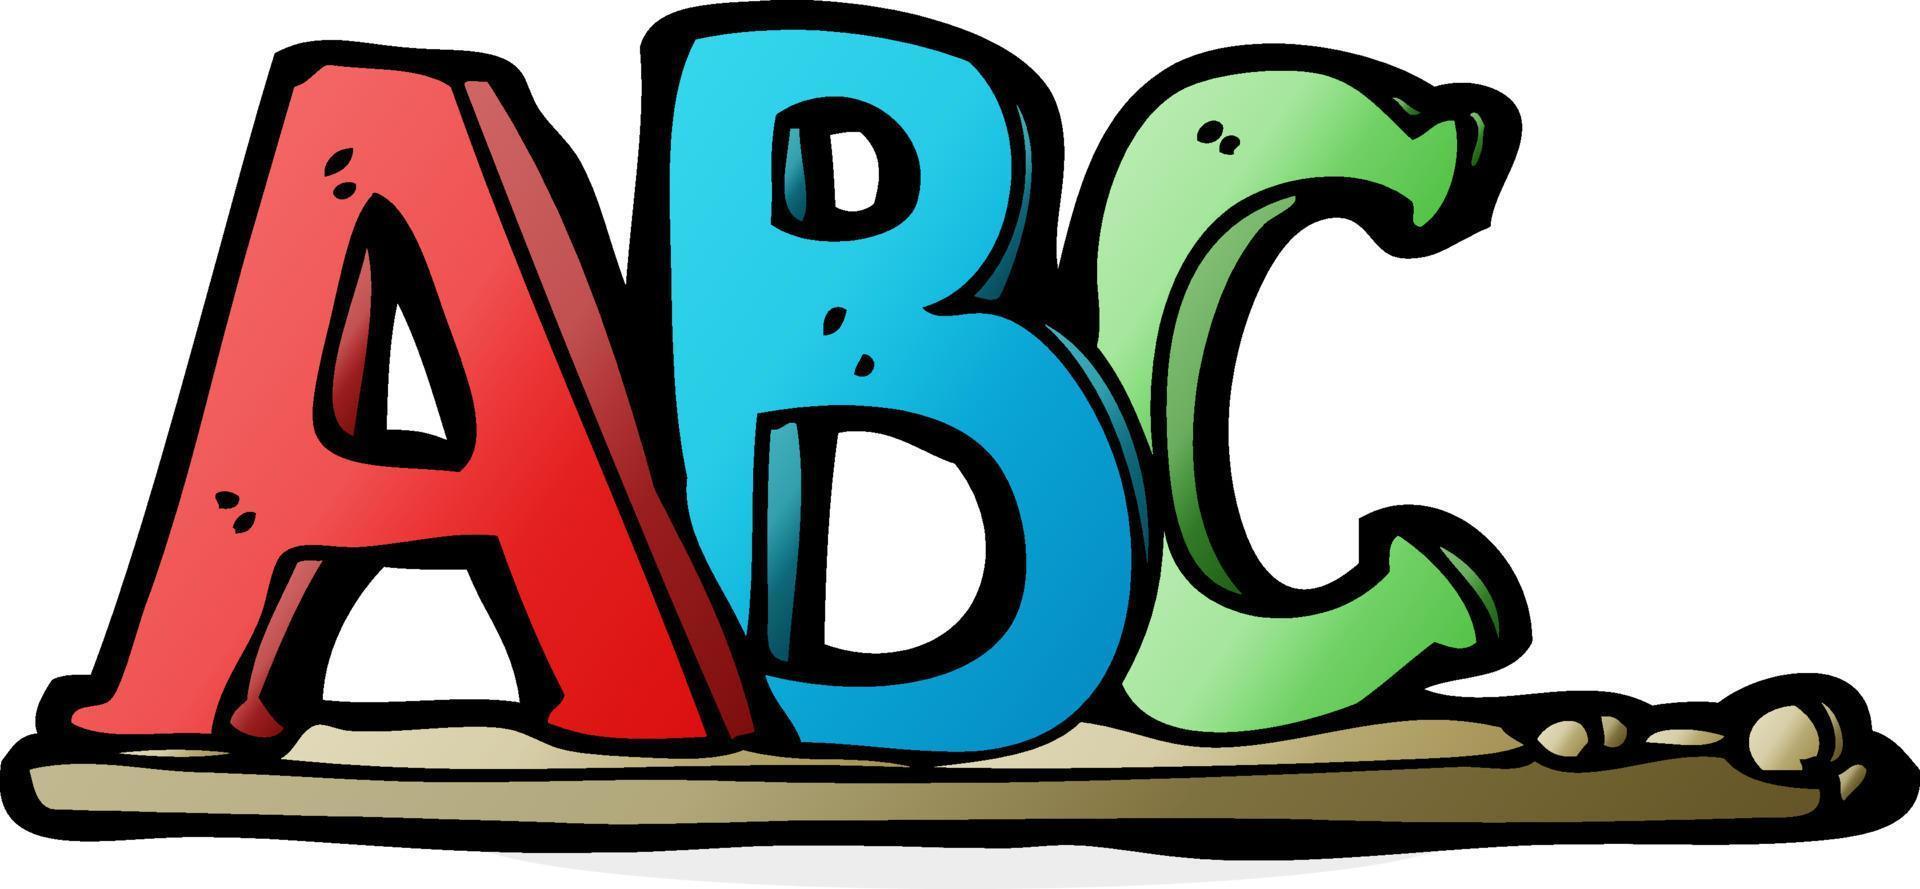 letras abc de dibujos animados vector